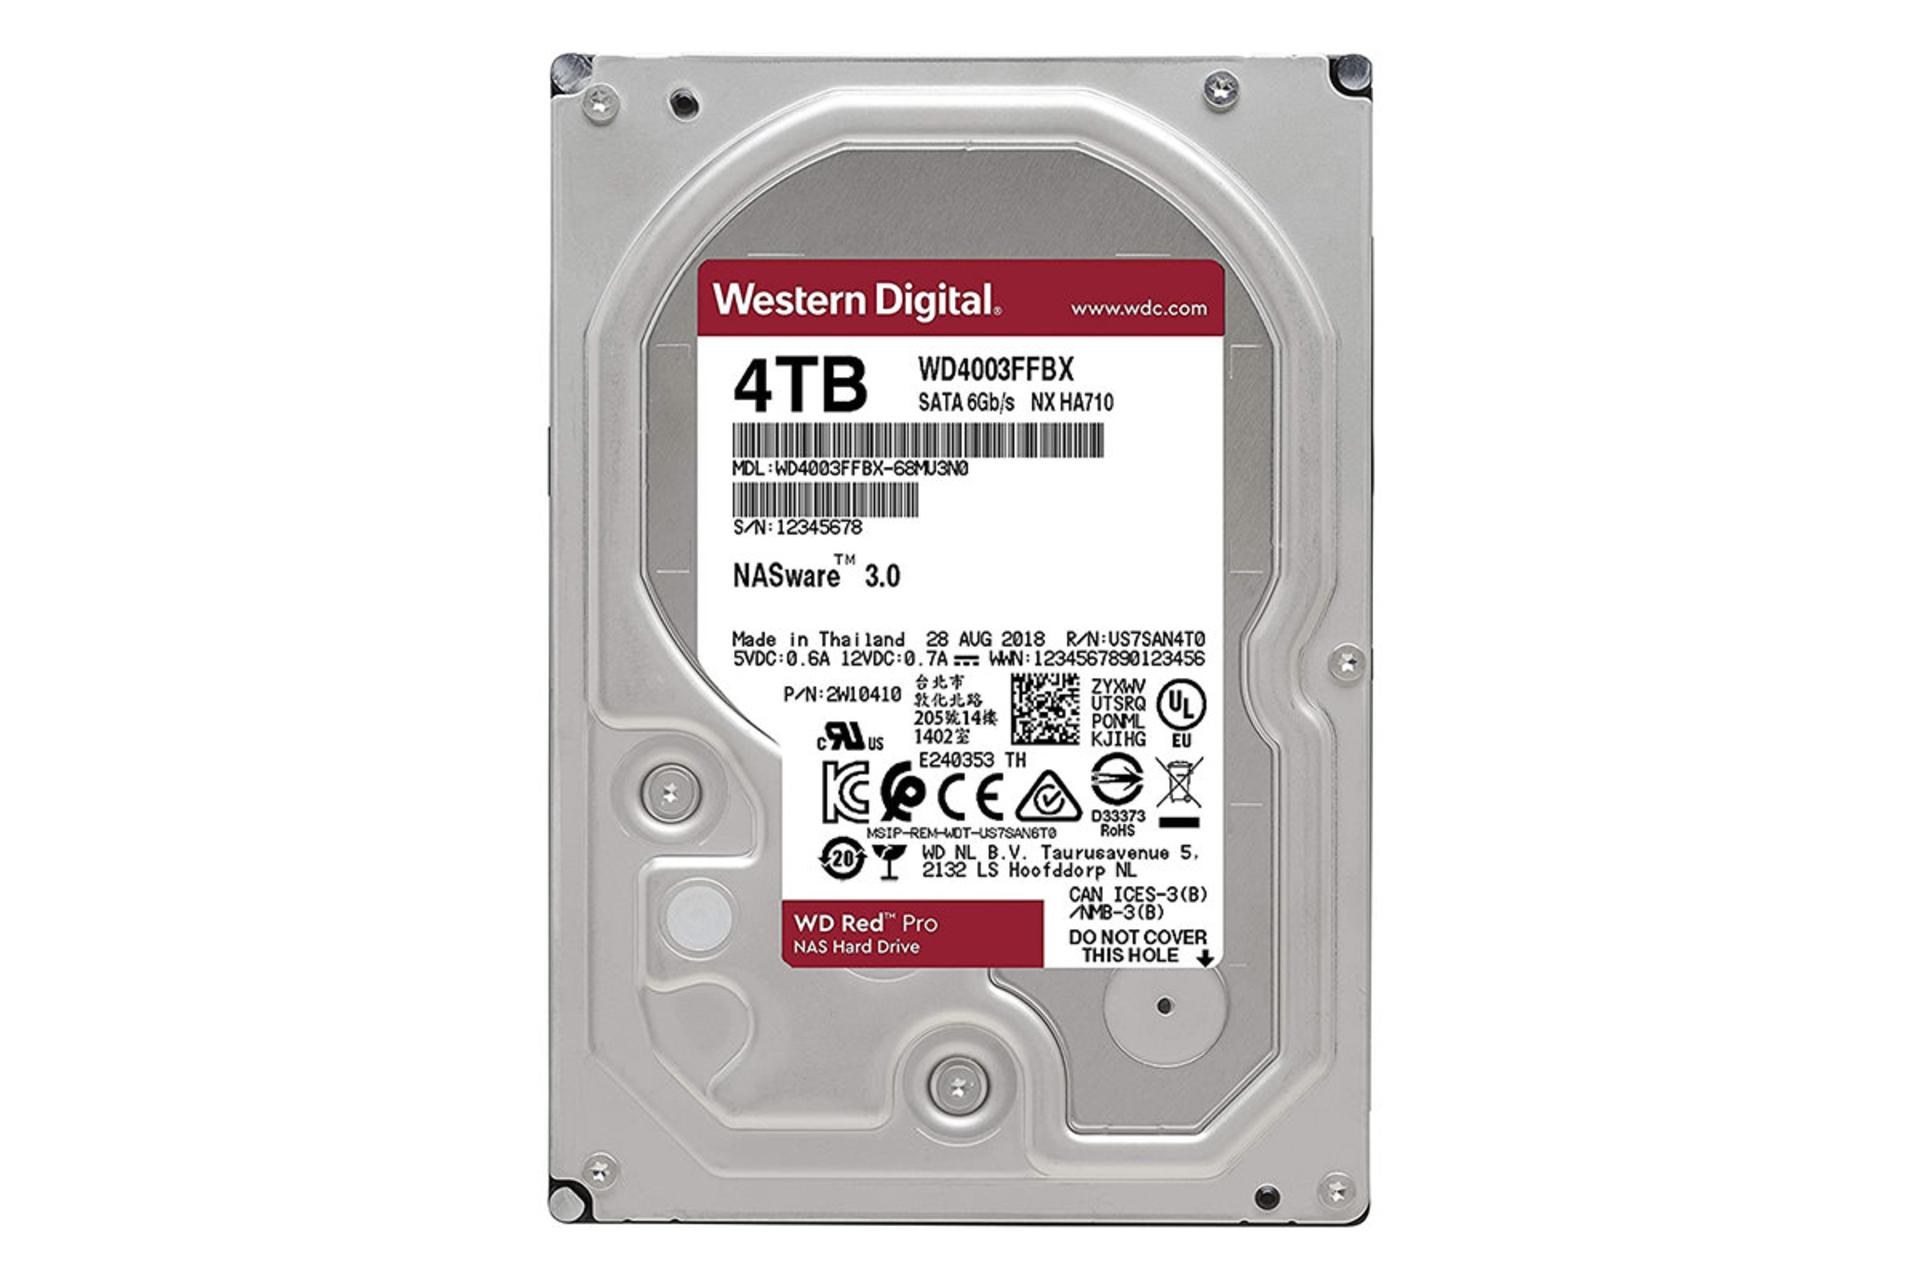 وسترن دیجیتال WD4003FFBX ظرفیت 4 ترابایت / Western Digital WD4003FFBX 4TB